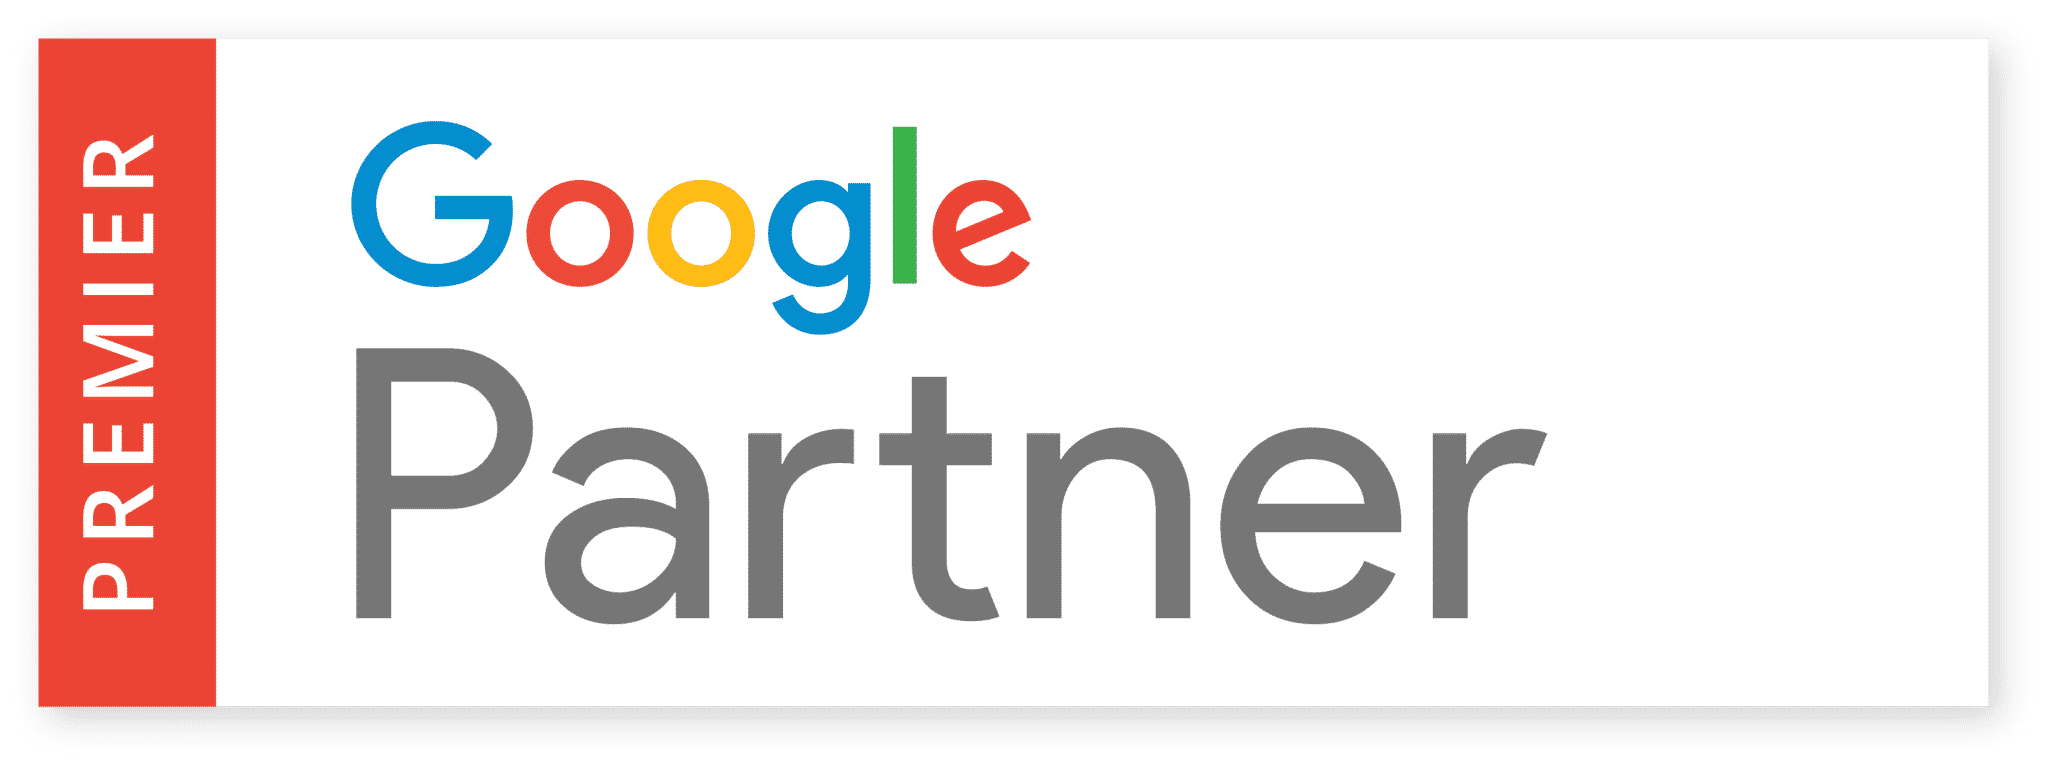 Google-Premier-Partner